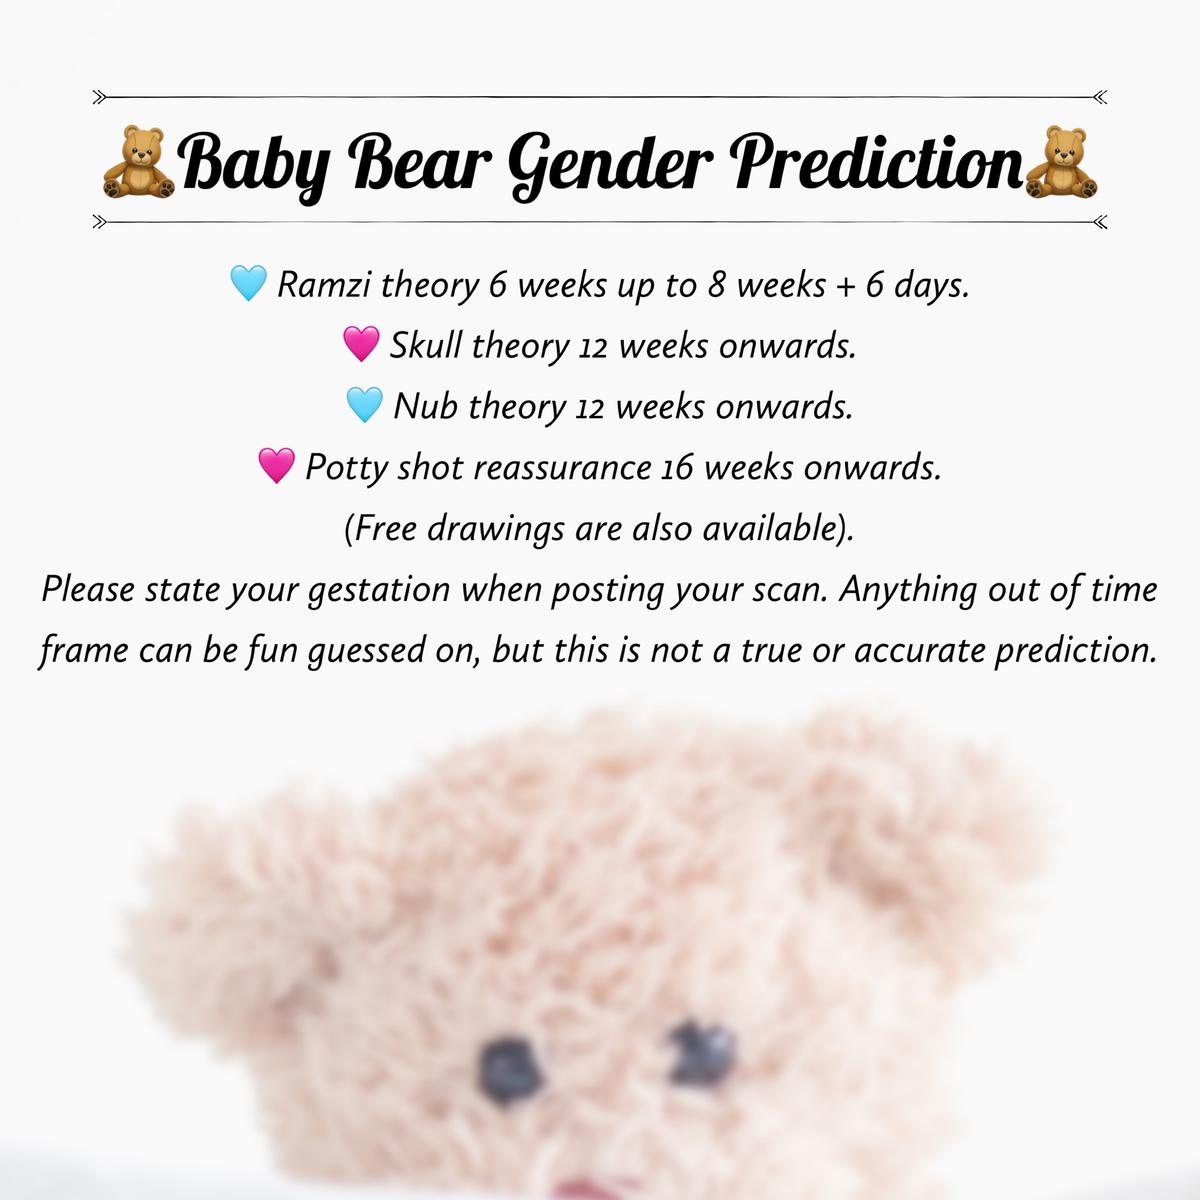 Baby Bear Gender Prediction. Ramzi, nub & skull theory. Drawings